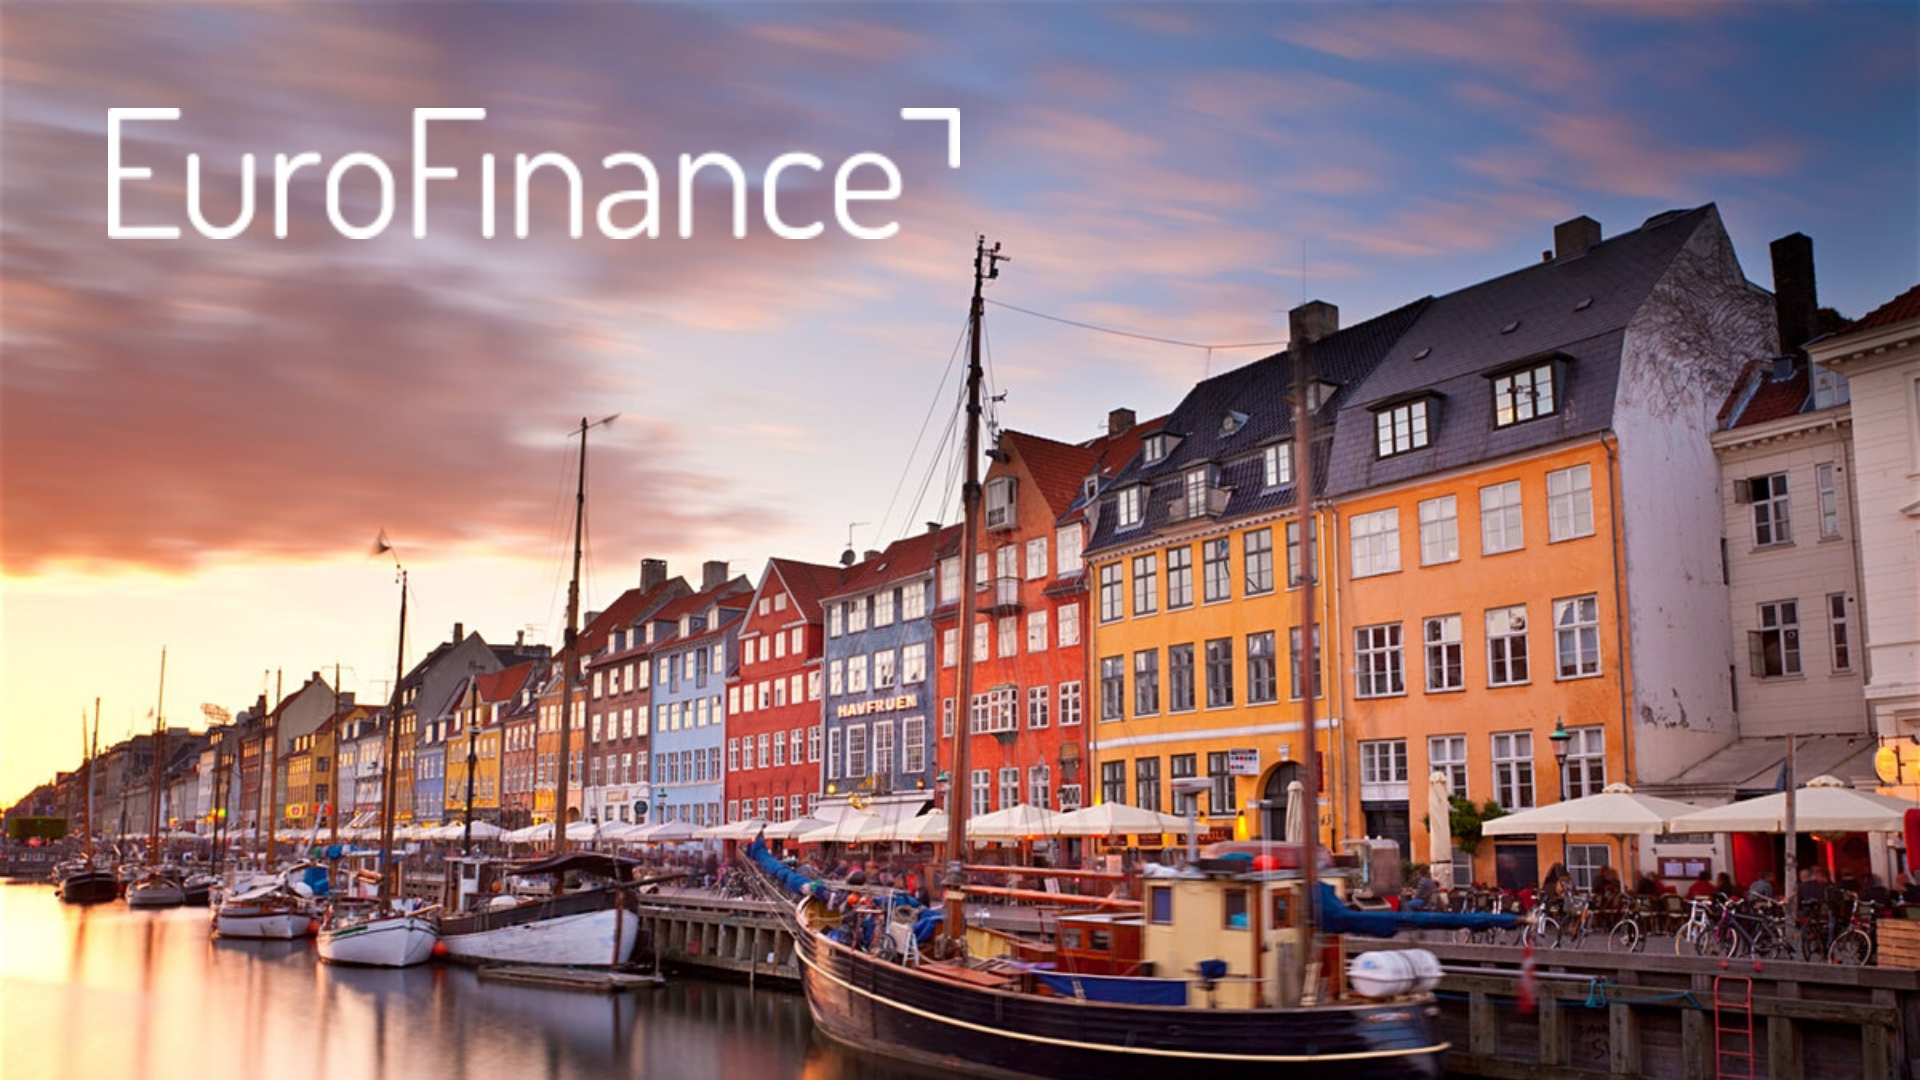 EuroFinance 2019 in Copenhagen